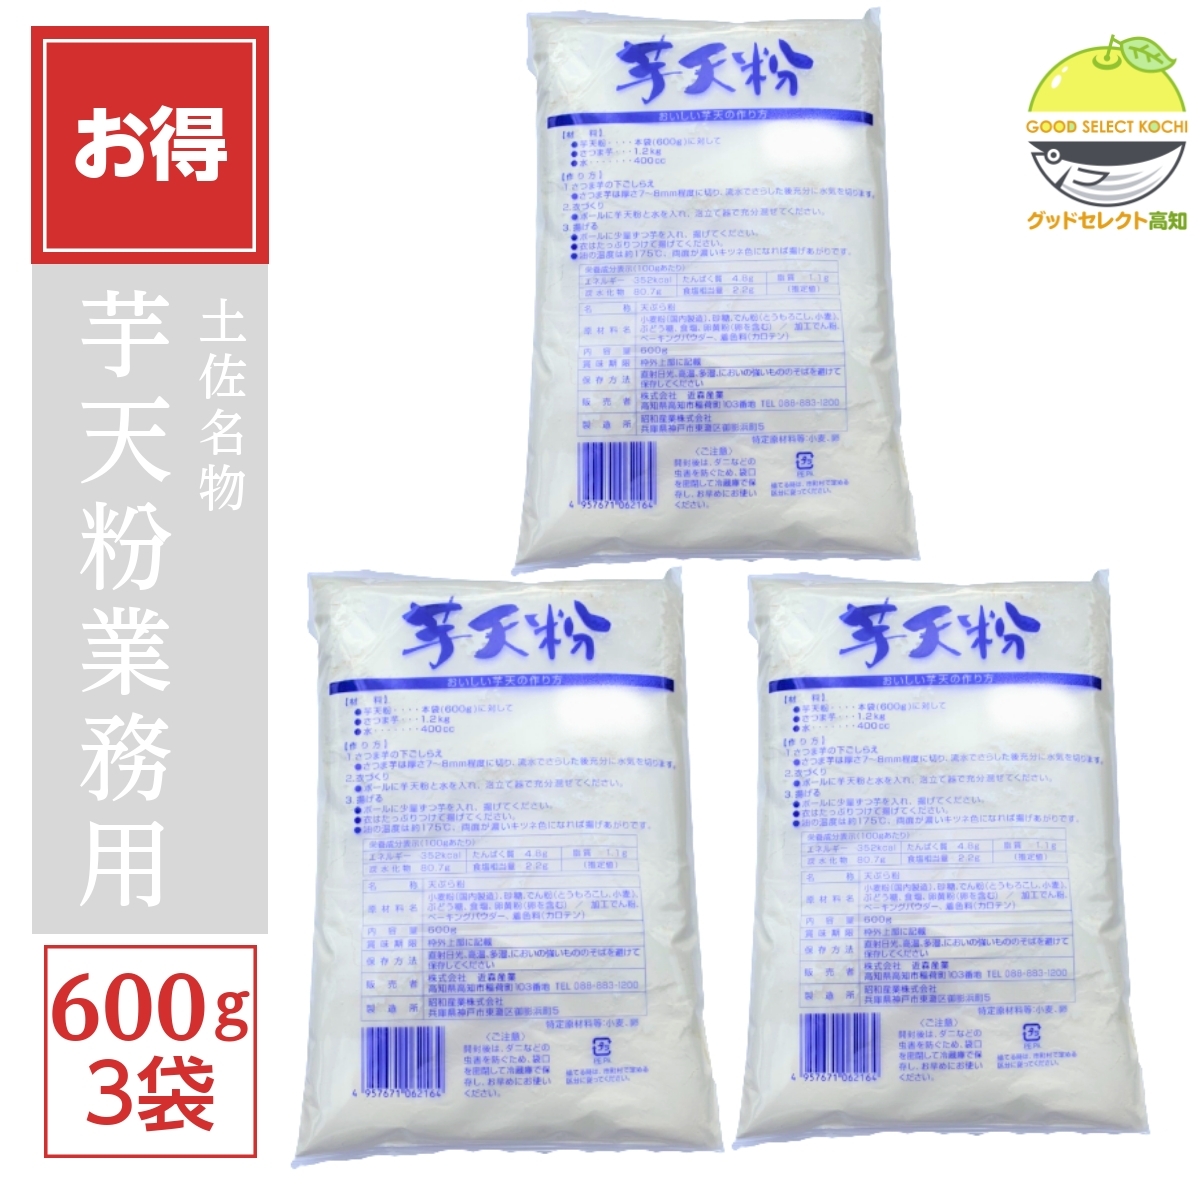  corm heaven flour business use 600g 3 sack 